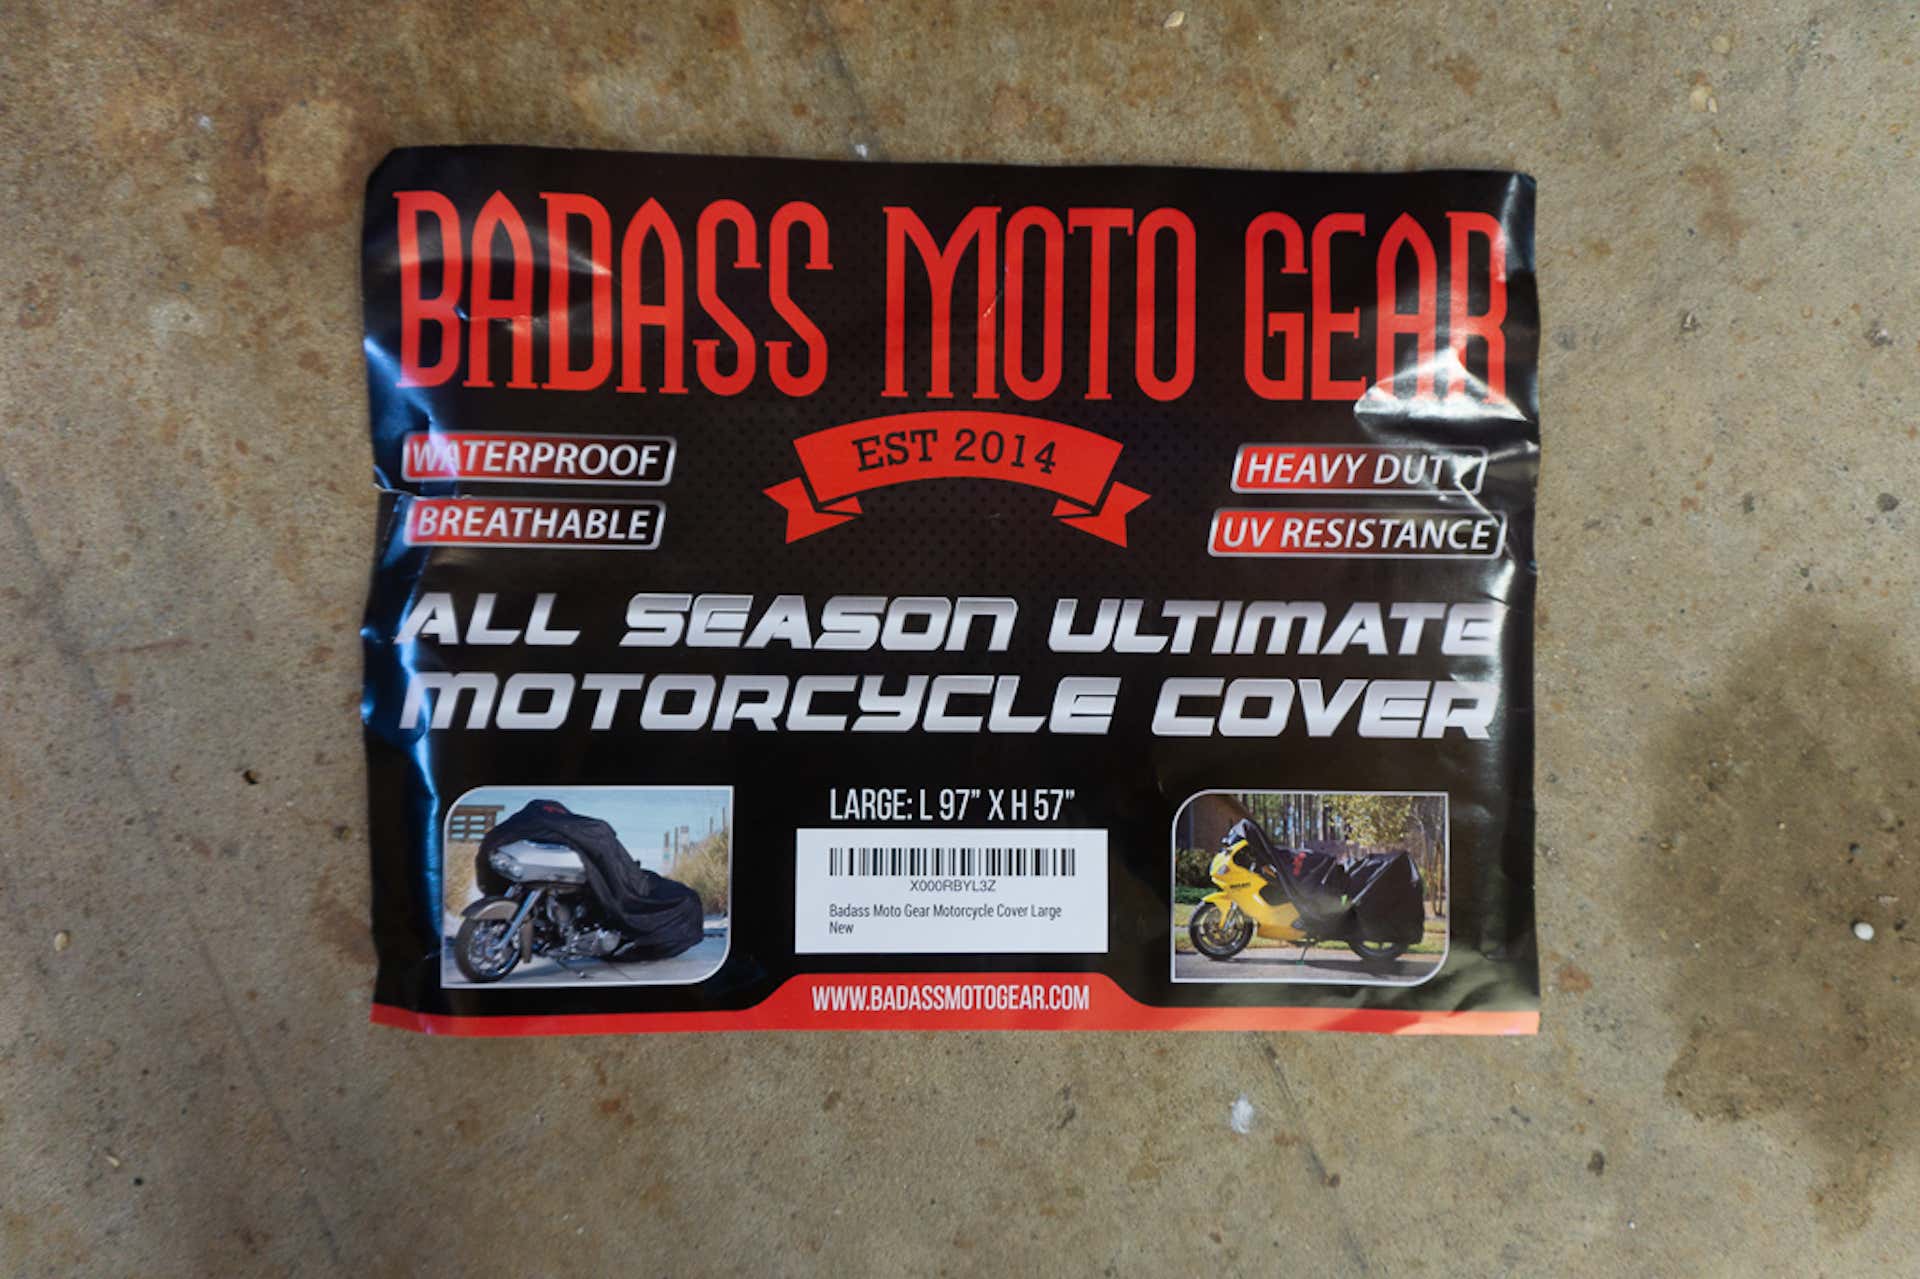 Badass Moto Gear All Season Ultimate Motorcycle Cover case.